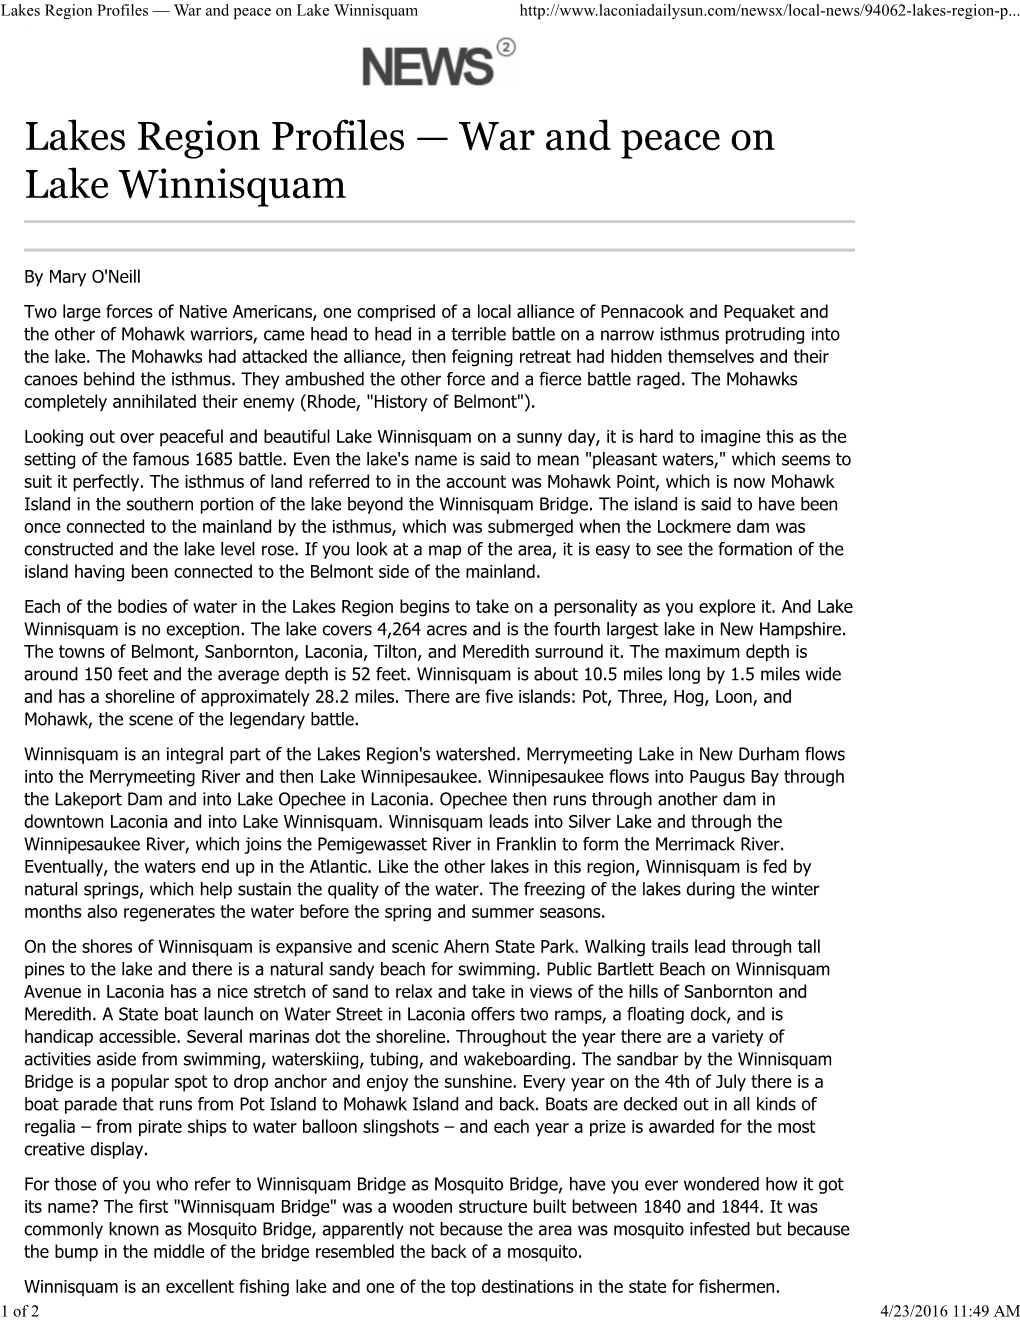 Lakes Region Profiles — War and Peace on Lake Winnisquam